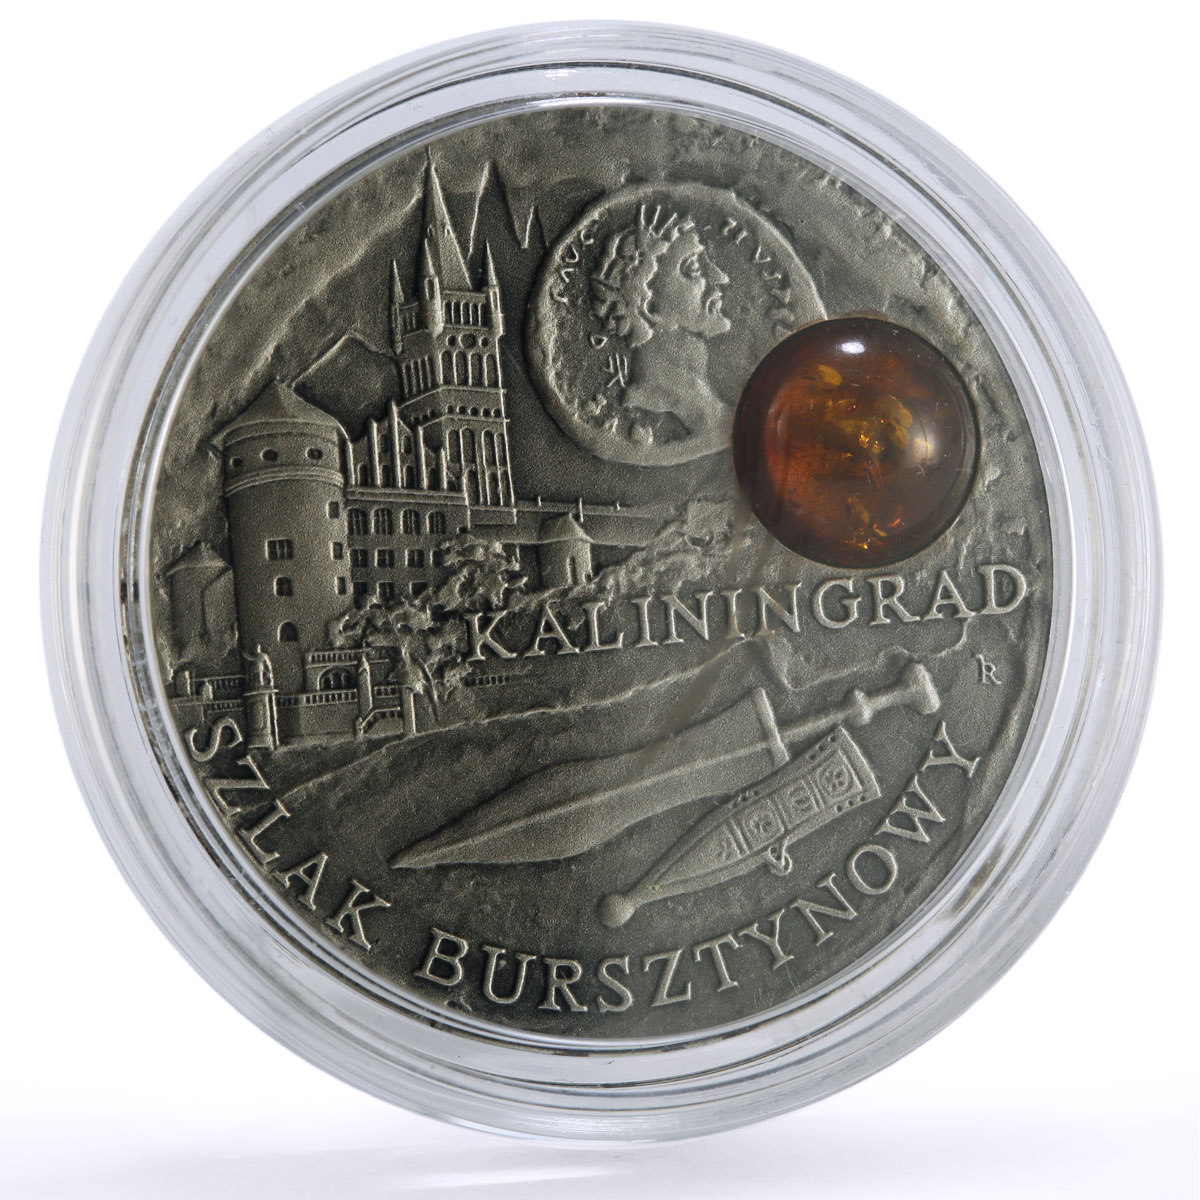 Niue 1 dollar Amber Routes Kaliningrad Konigsberg City silver coin 2008